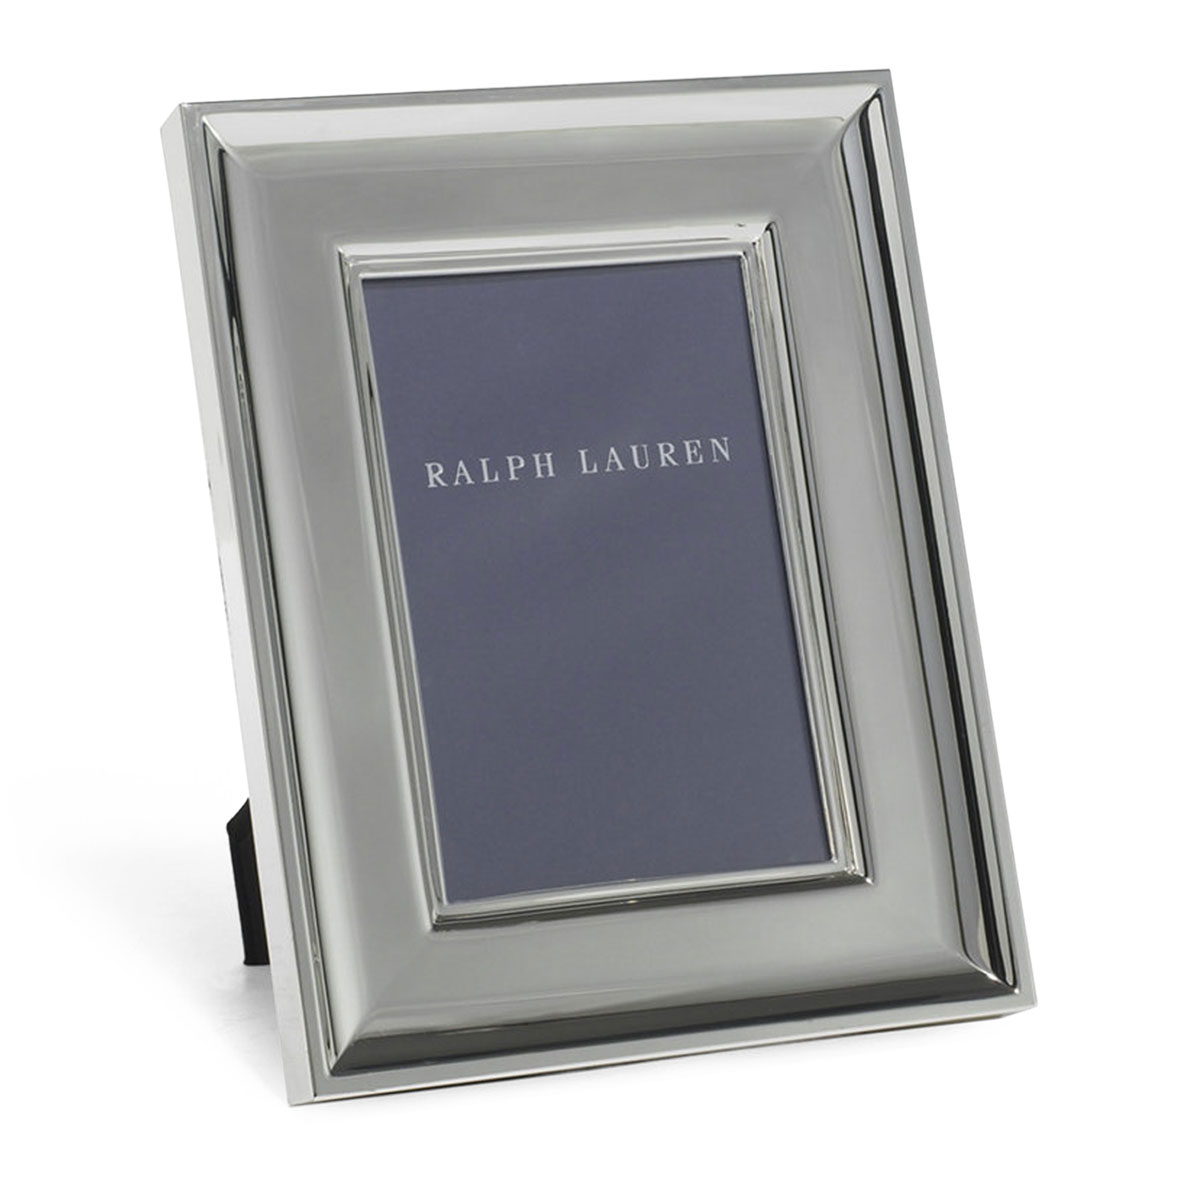 Ralph Lauren Cove 5x7" Picture Frame